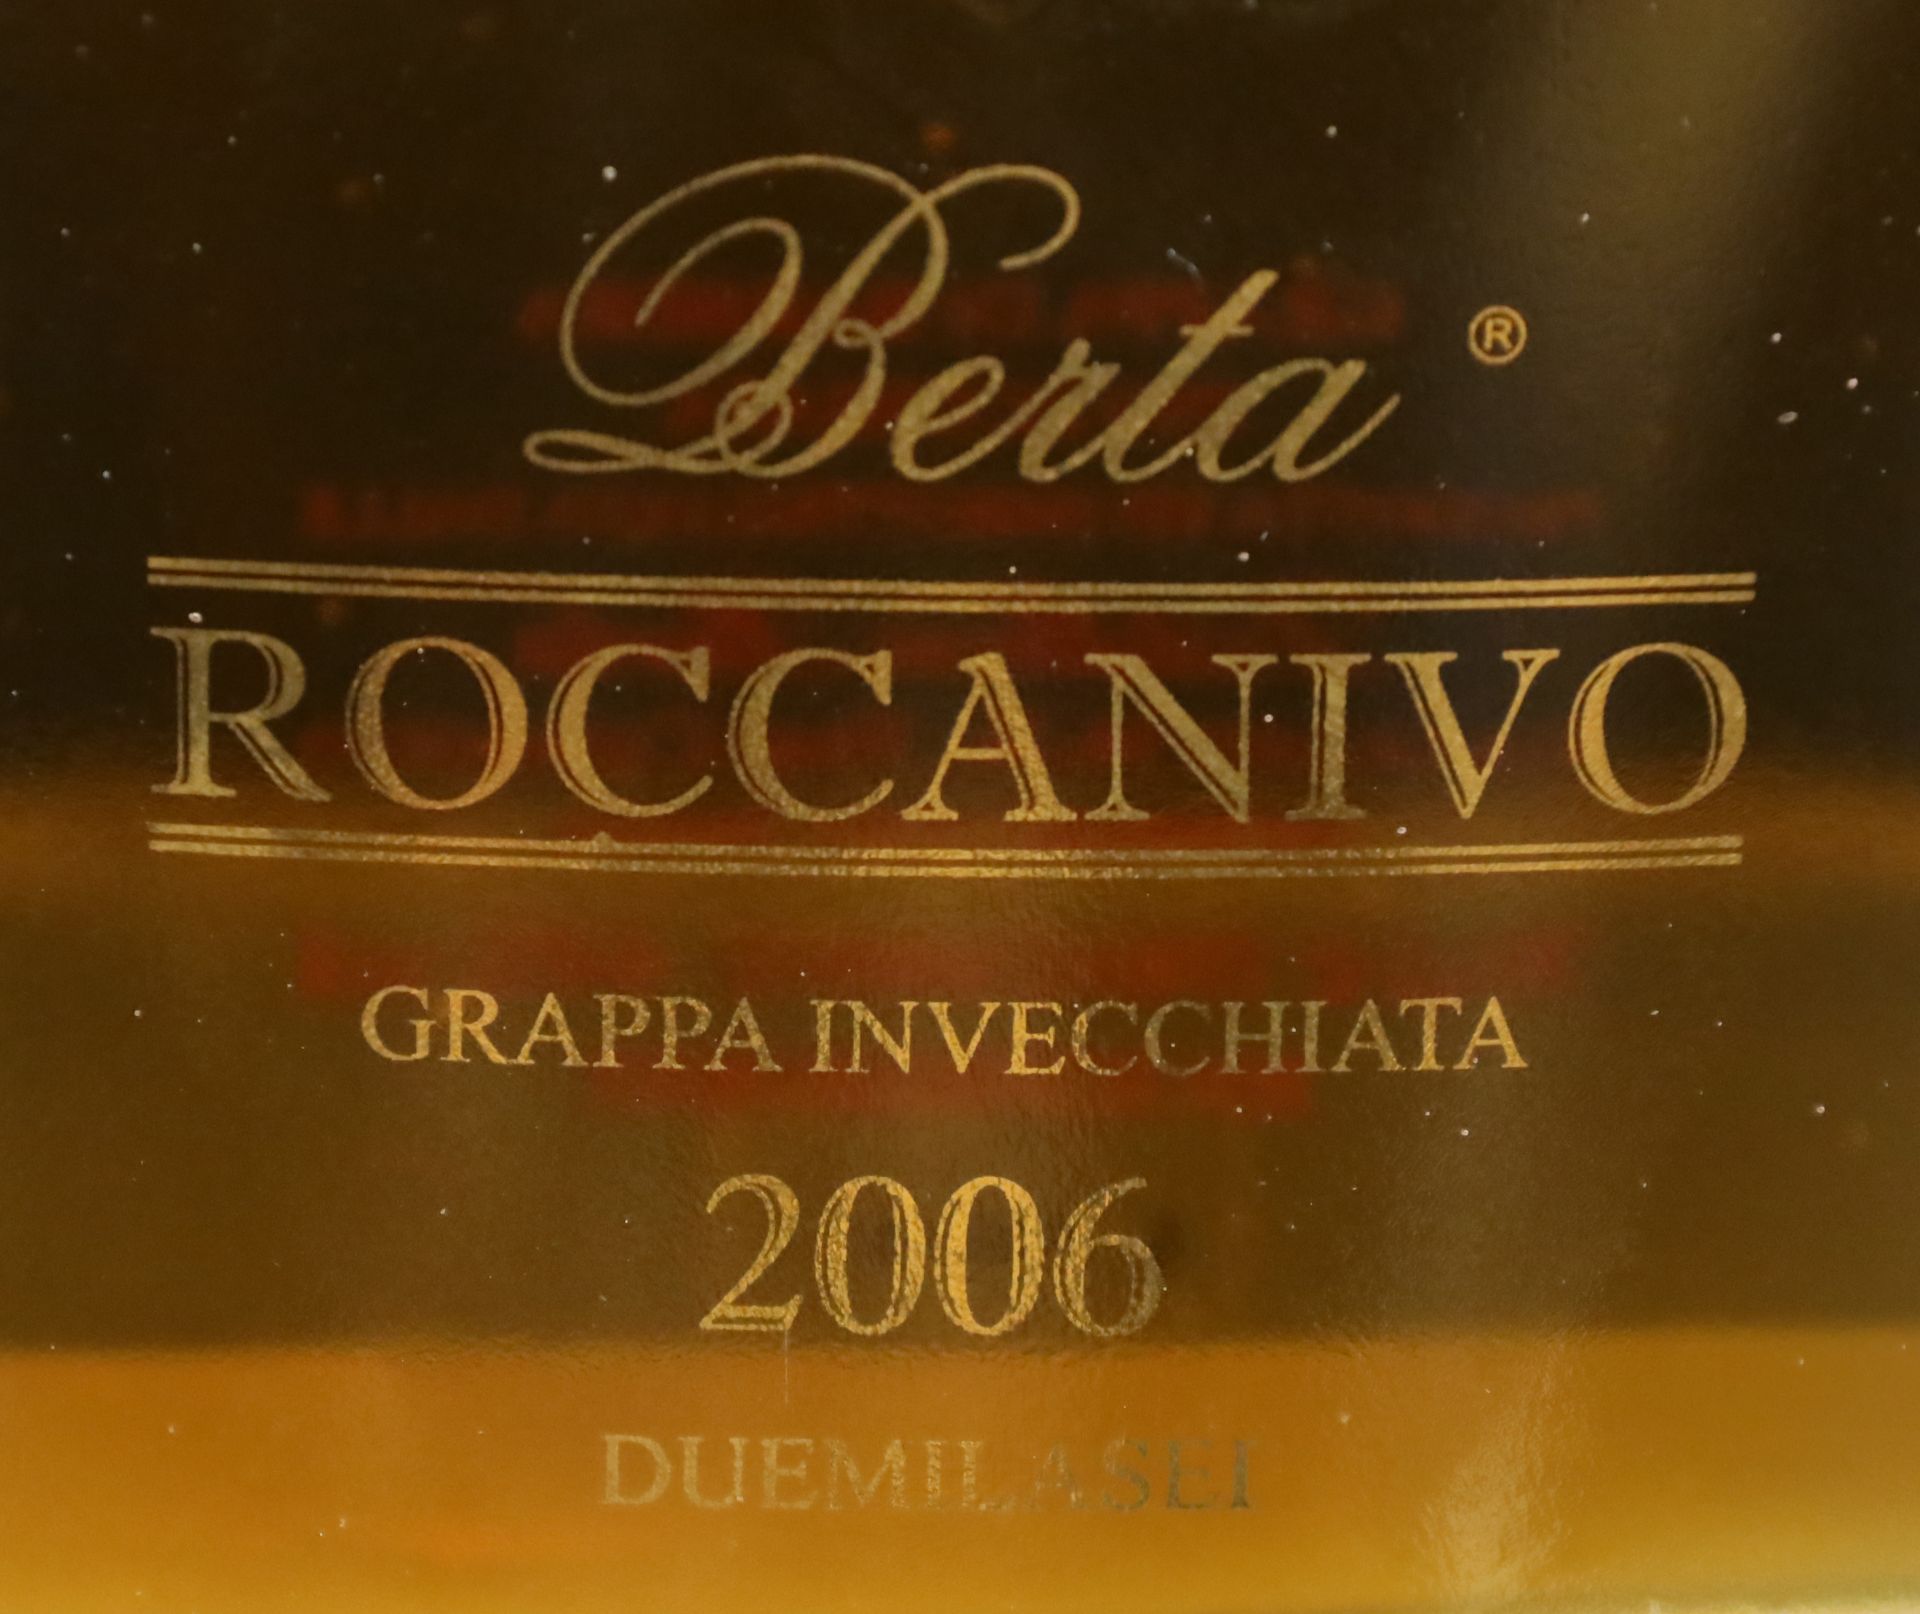 1 Flasche Grappa. BERTA. "Roccanivo". Italien. 2006. - Bild 5 aus 5